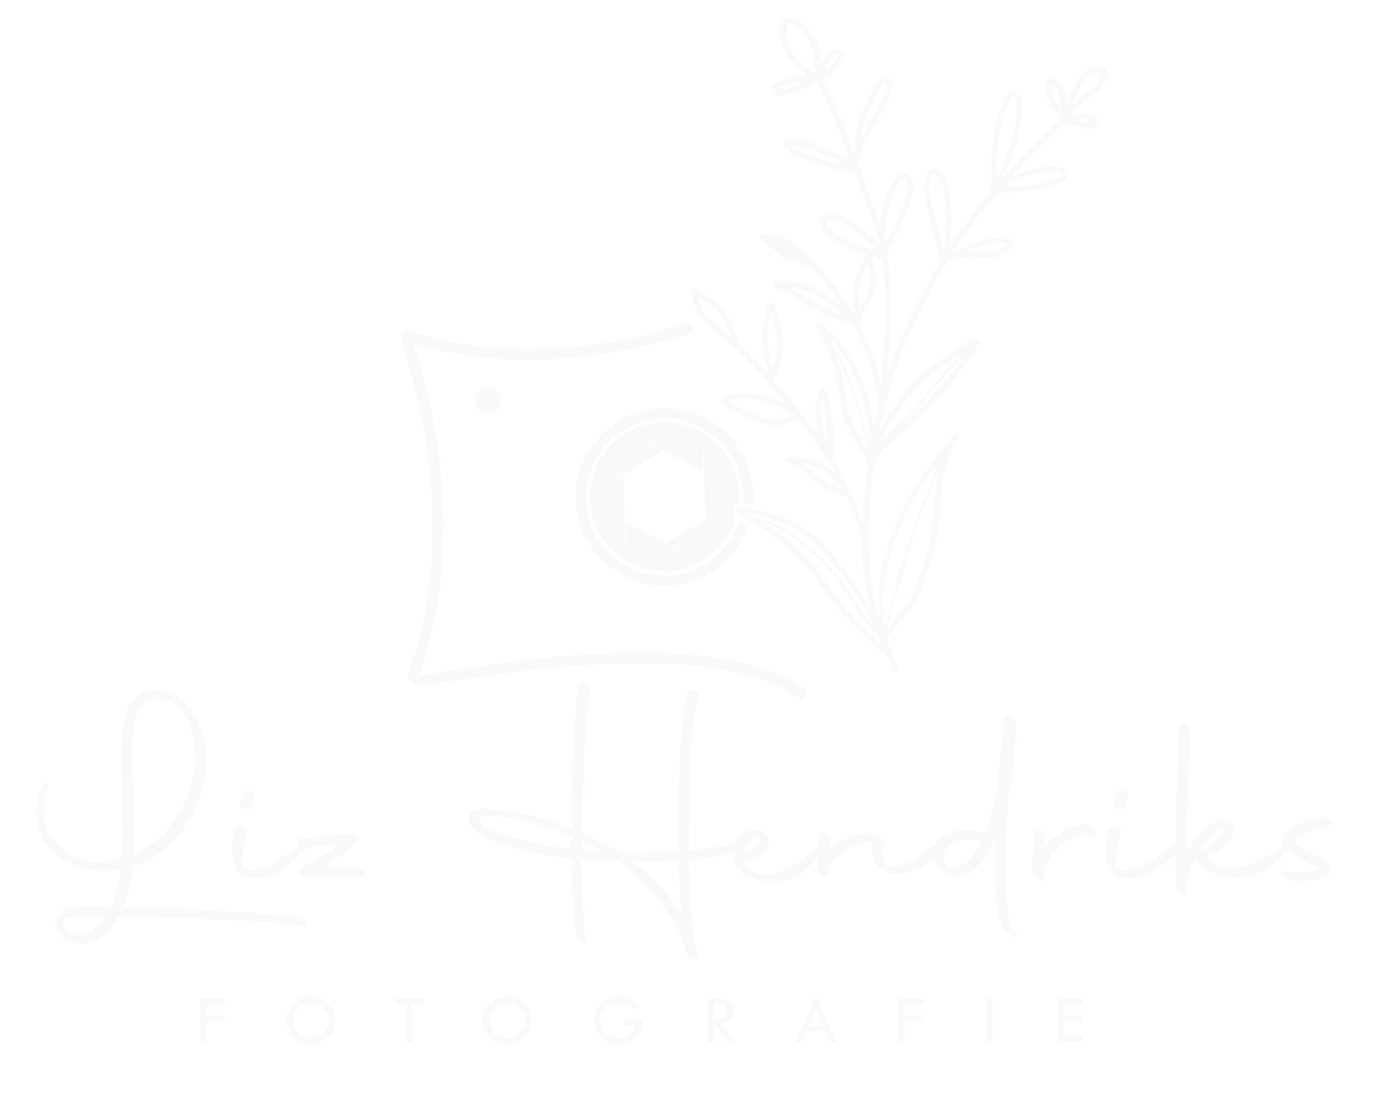 Liz Hendriks Fotografie logo wit